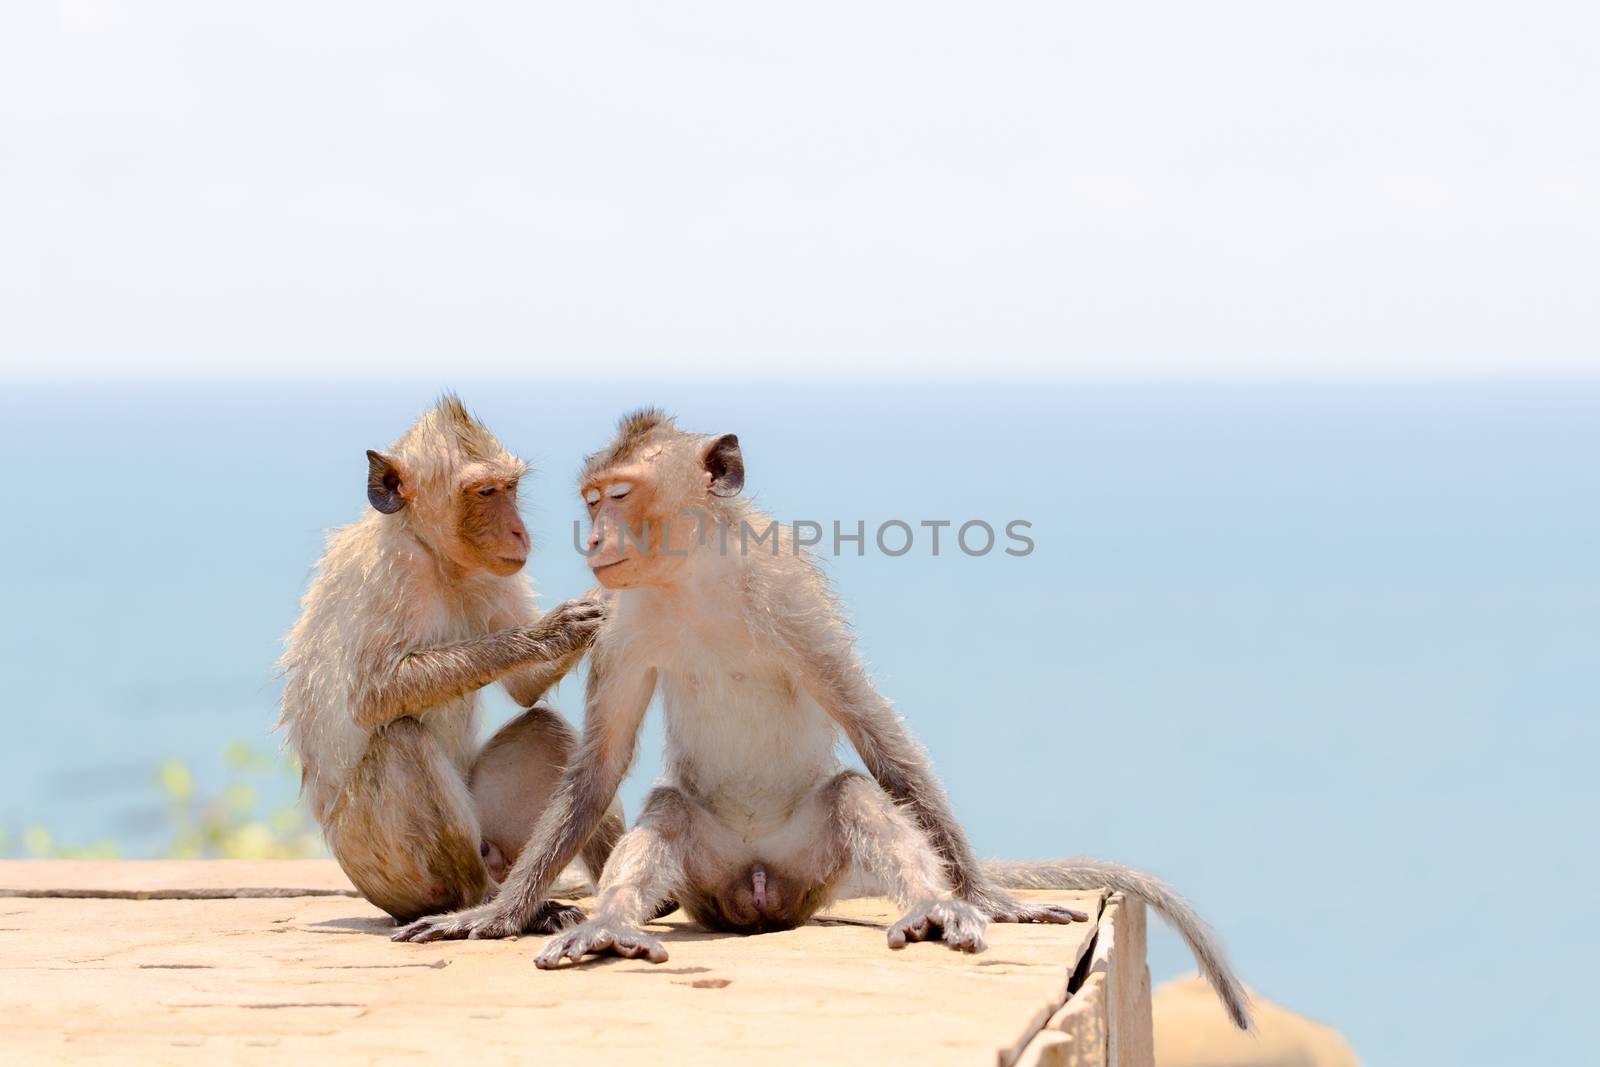 monkey by narinbg